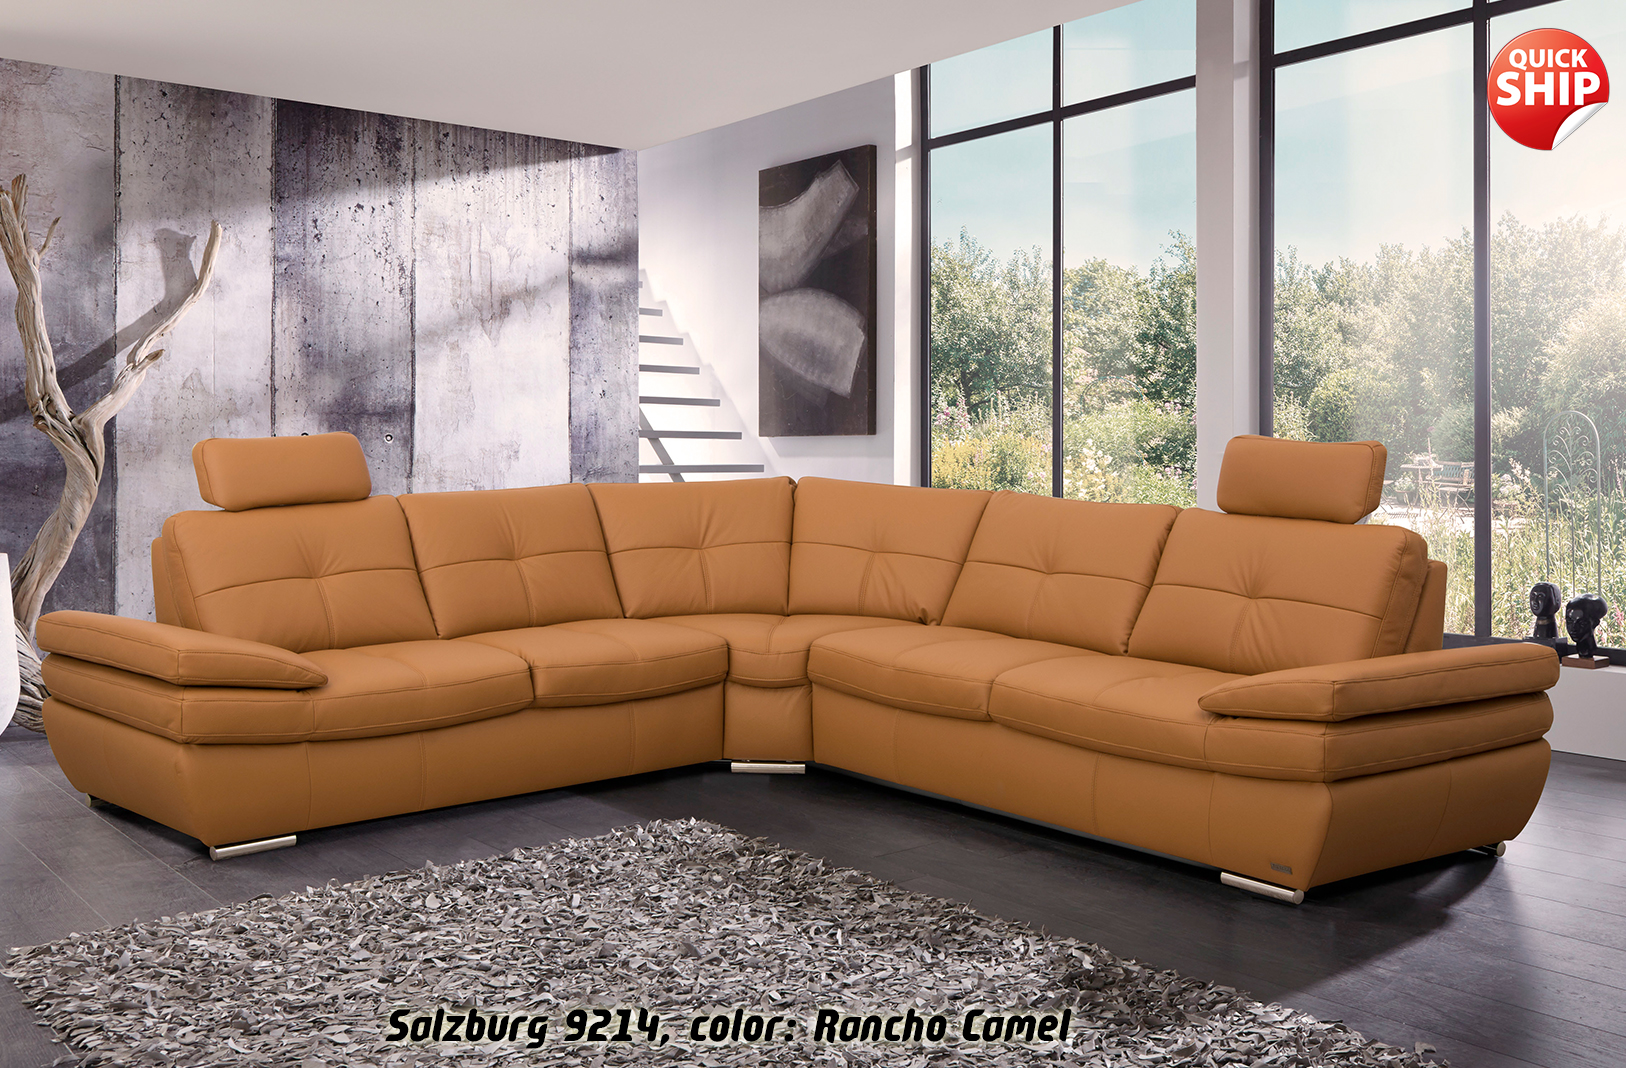 Salzburg Sectional Sofa Design And